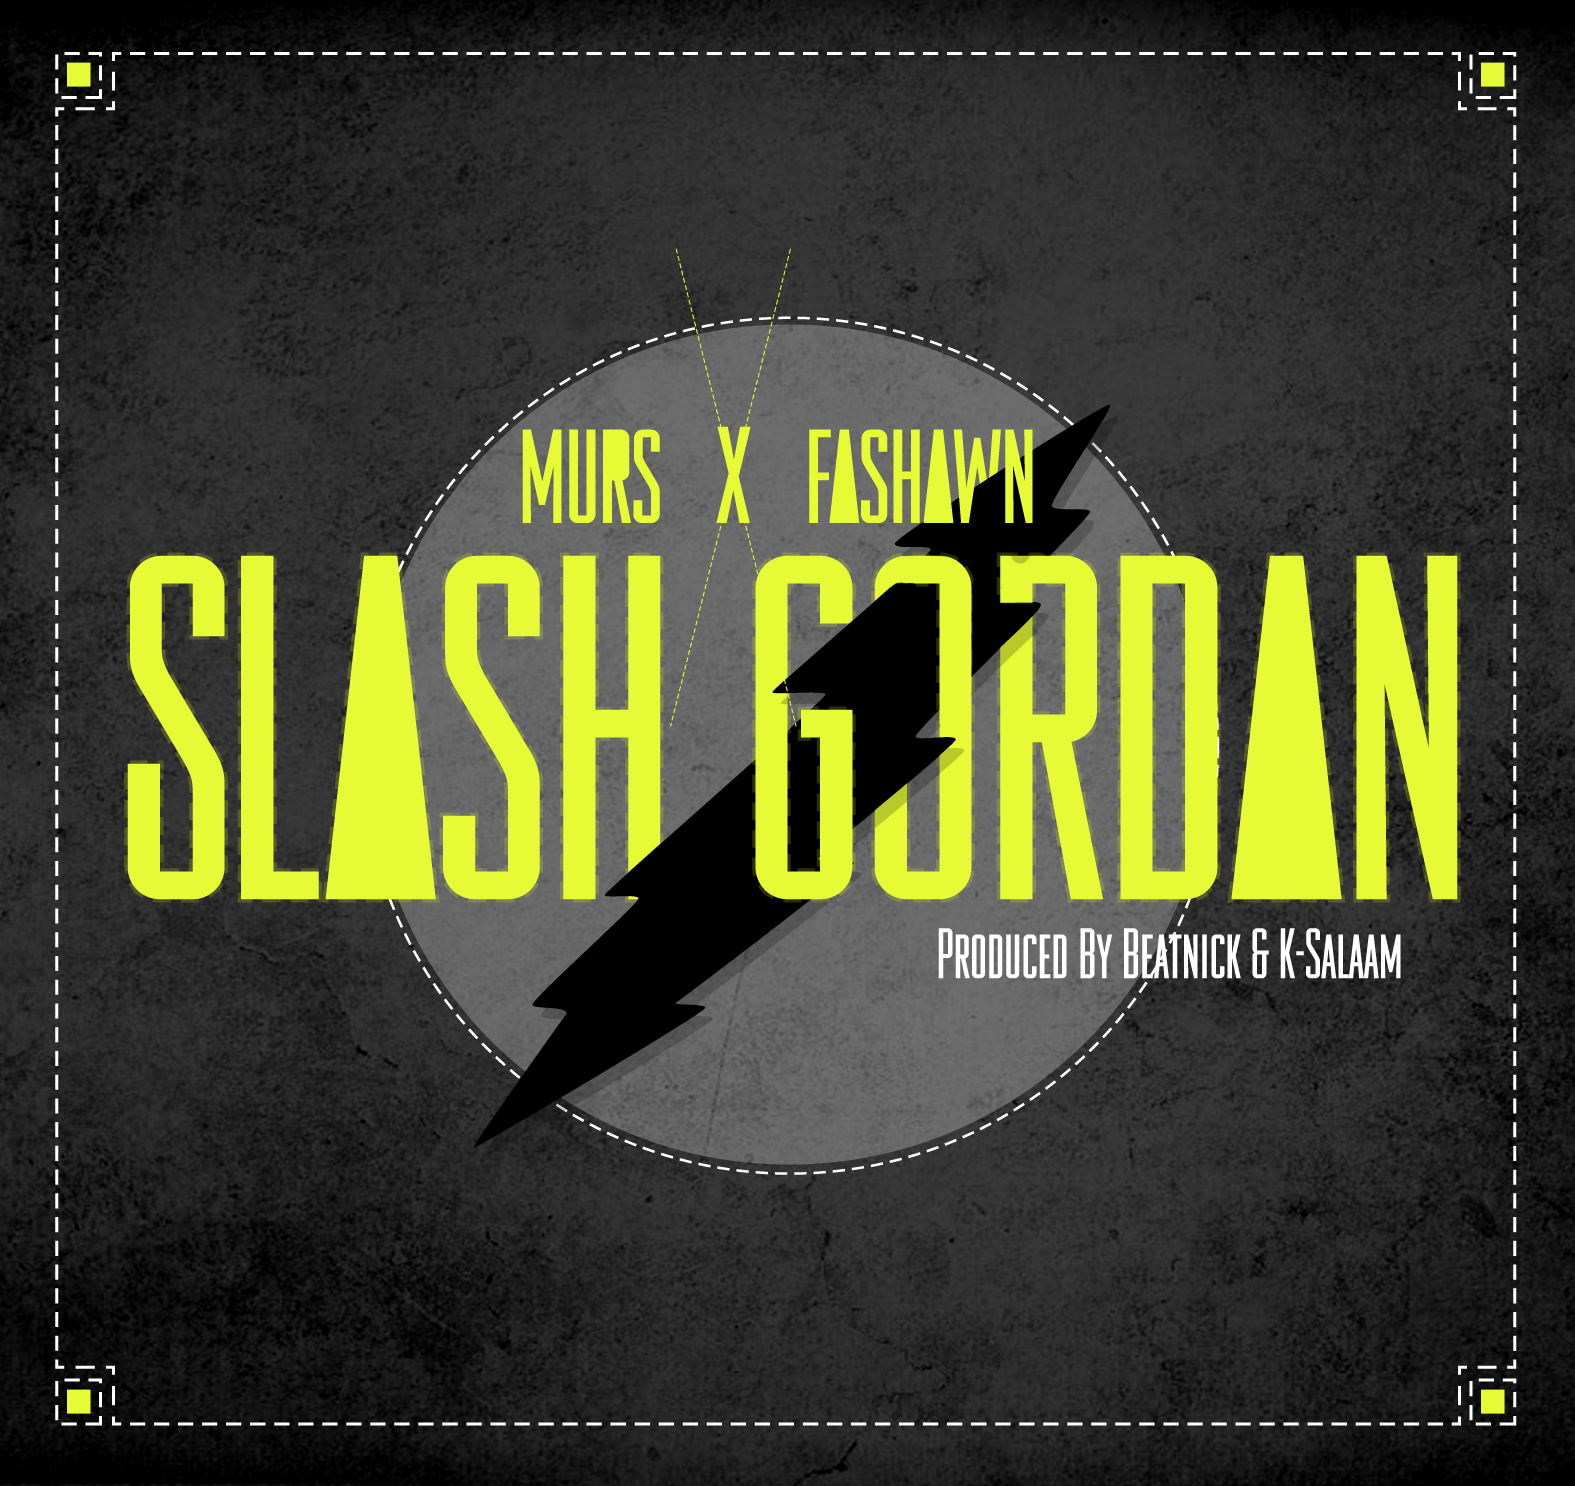 Murs & Fashawn - "Slash Gordan" (Video)